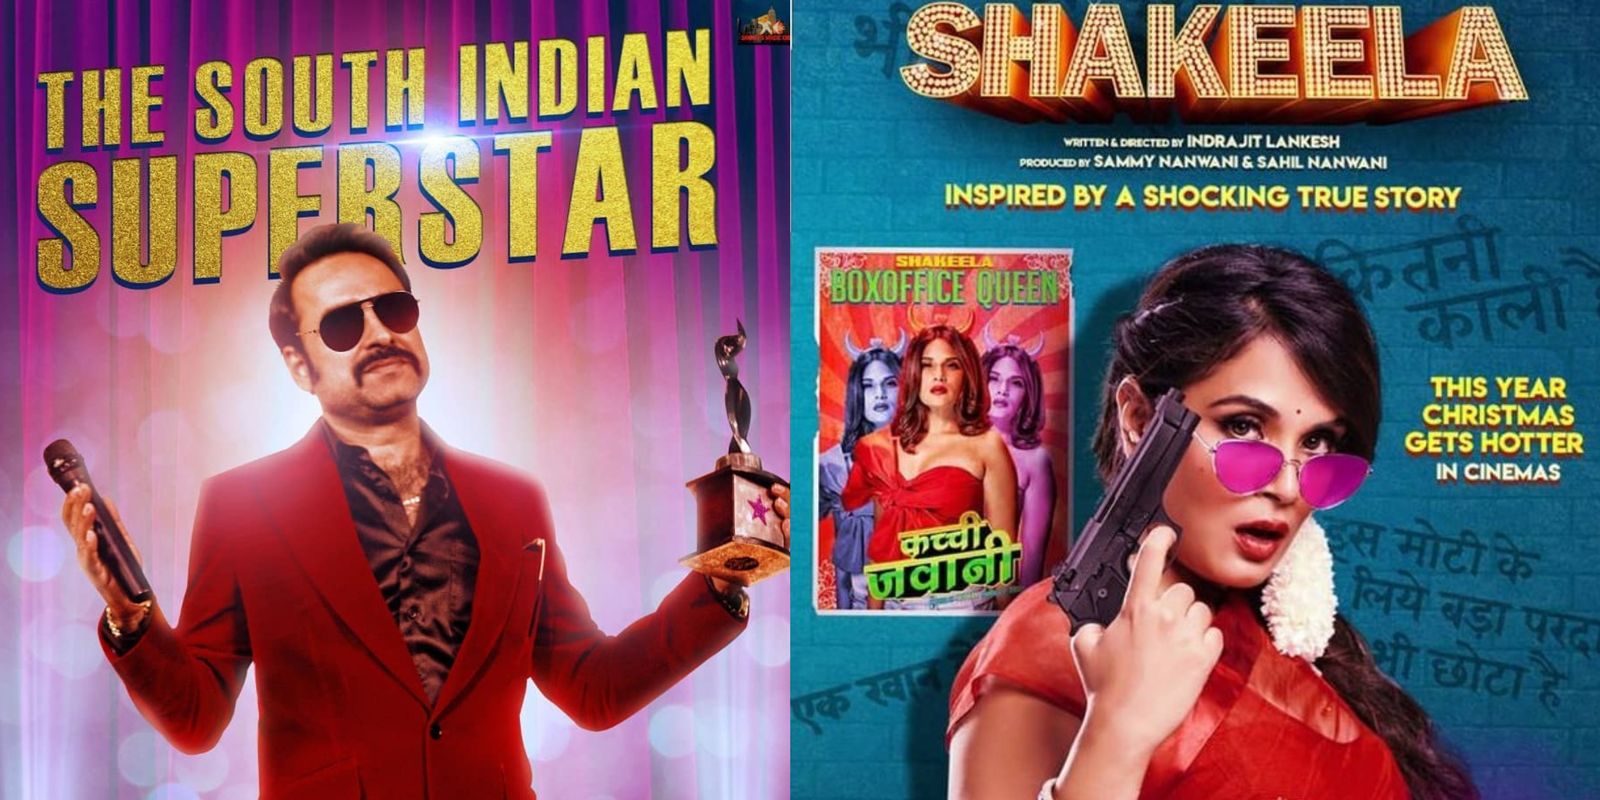 Pankaj Tripathi On His Character In Richa Chadha Starrer Shakeela: “I Am Playing A Clean, Flamboyantly Dressed Superstar”